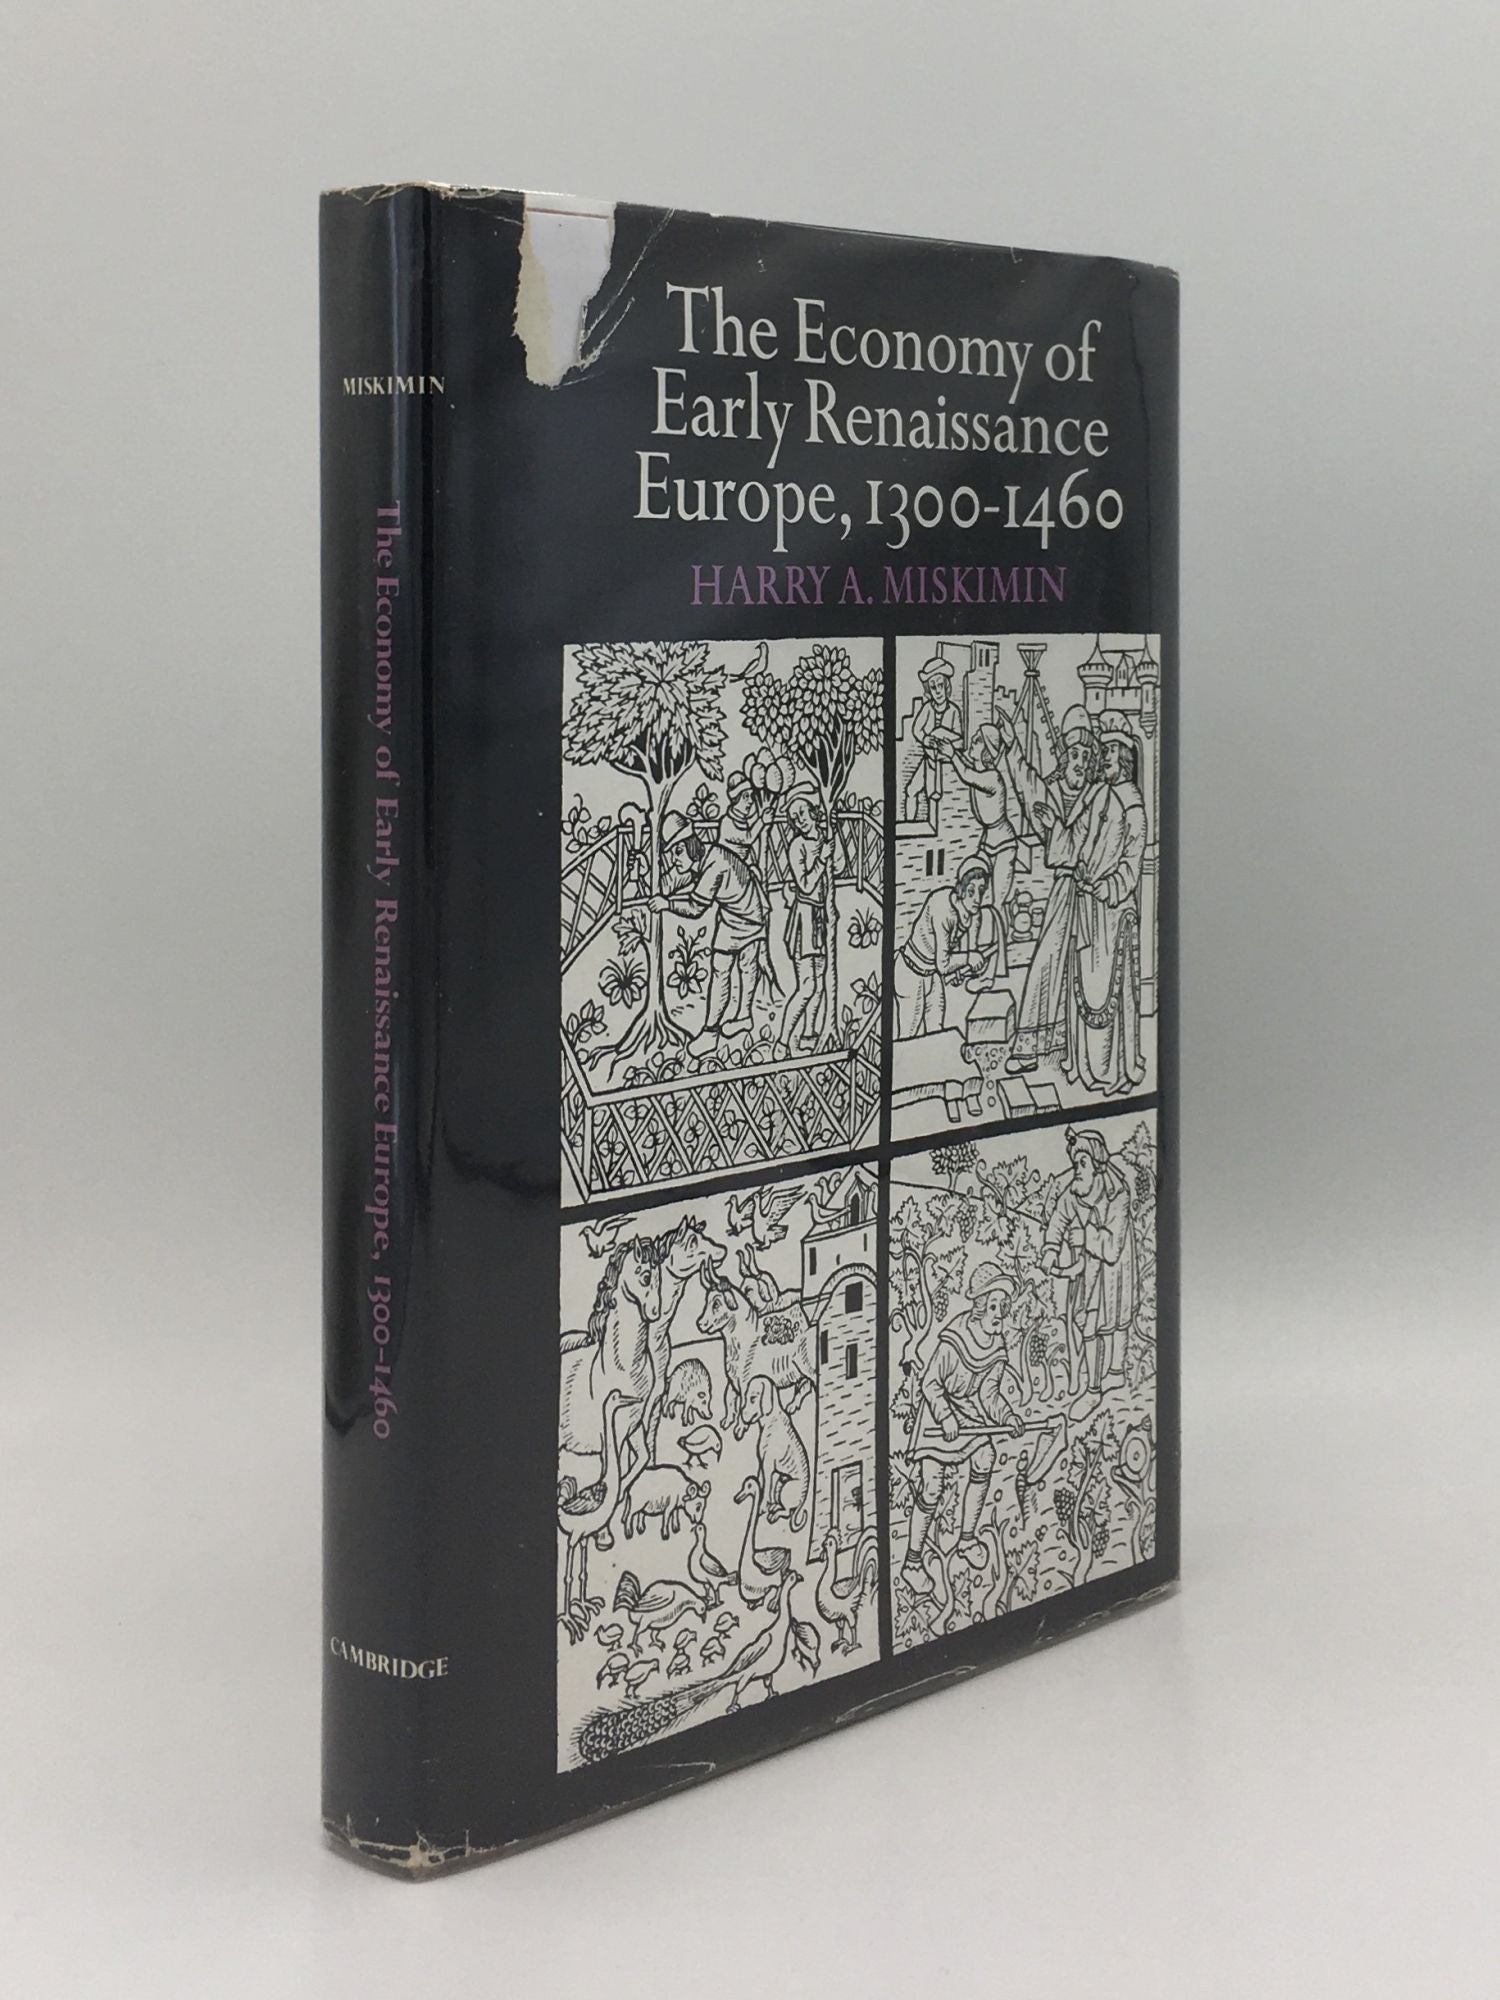 MISKIMIN Harry A. - The Economy of Early Renaissance Europe 1300-1460